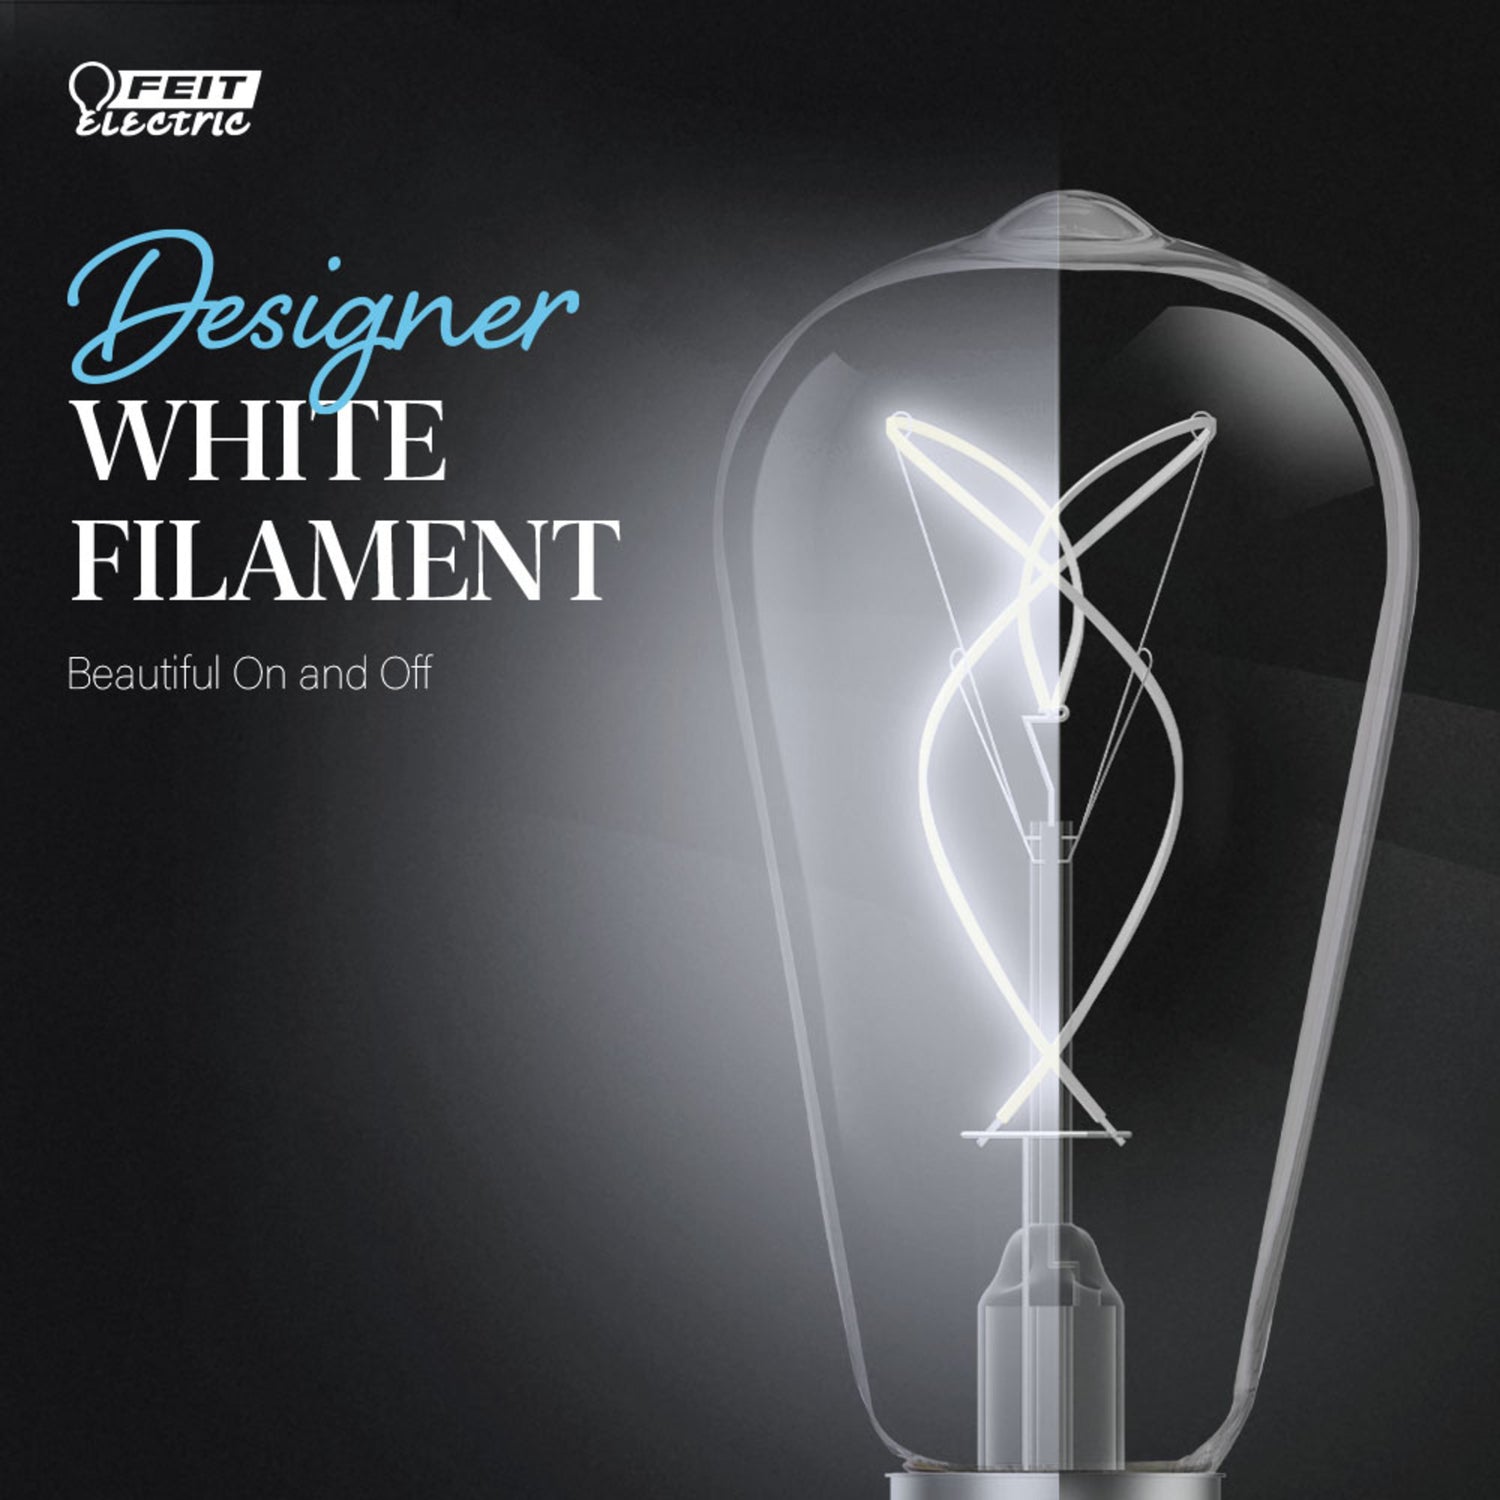 8.2W (60W Equivalent) Daylight (5000K) ST19 Shape (E26 Base) LED Designer White Filament Bulb